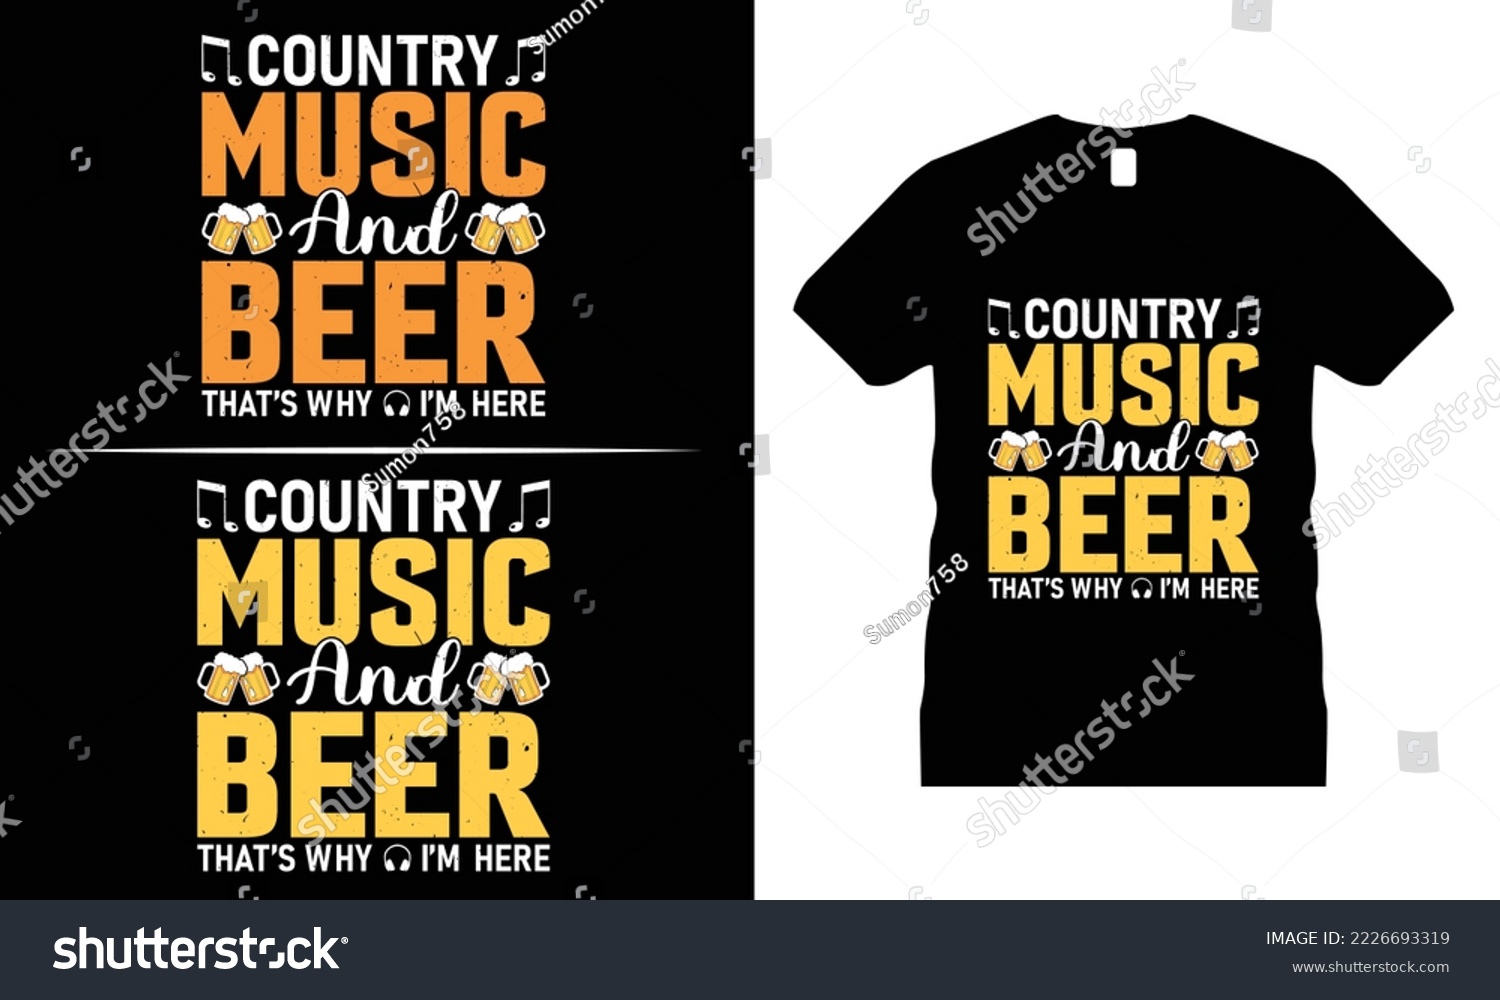 SVG of Music Motivational T-shirt Design vector. Use for T-Shirt, mugs, stickers, etc. svg